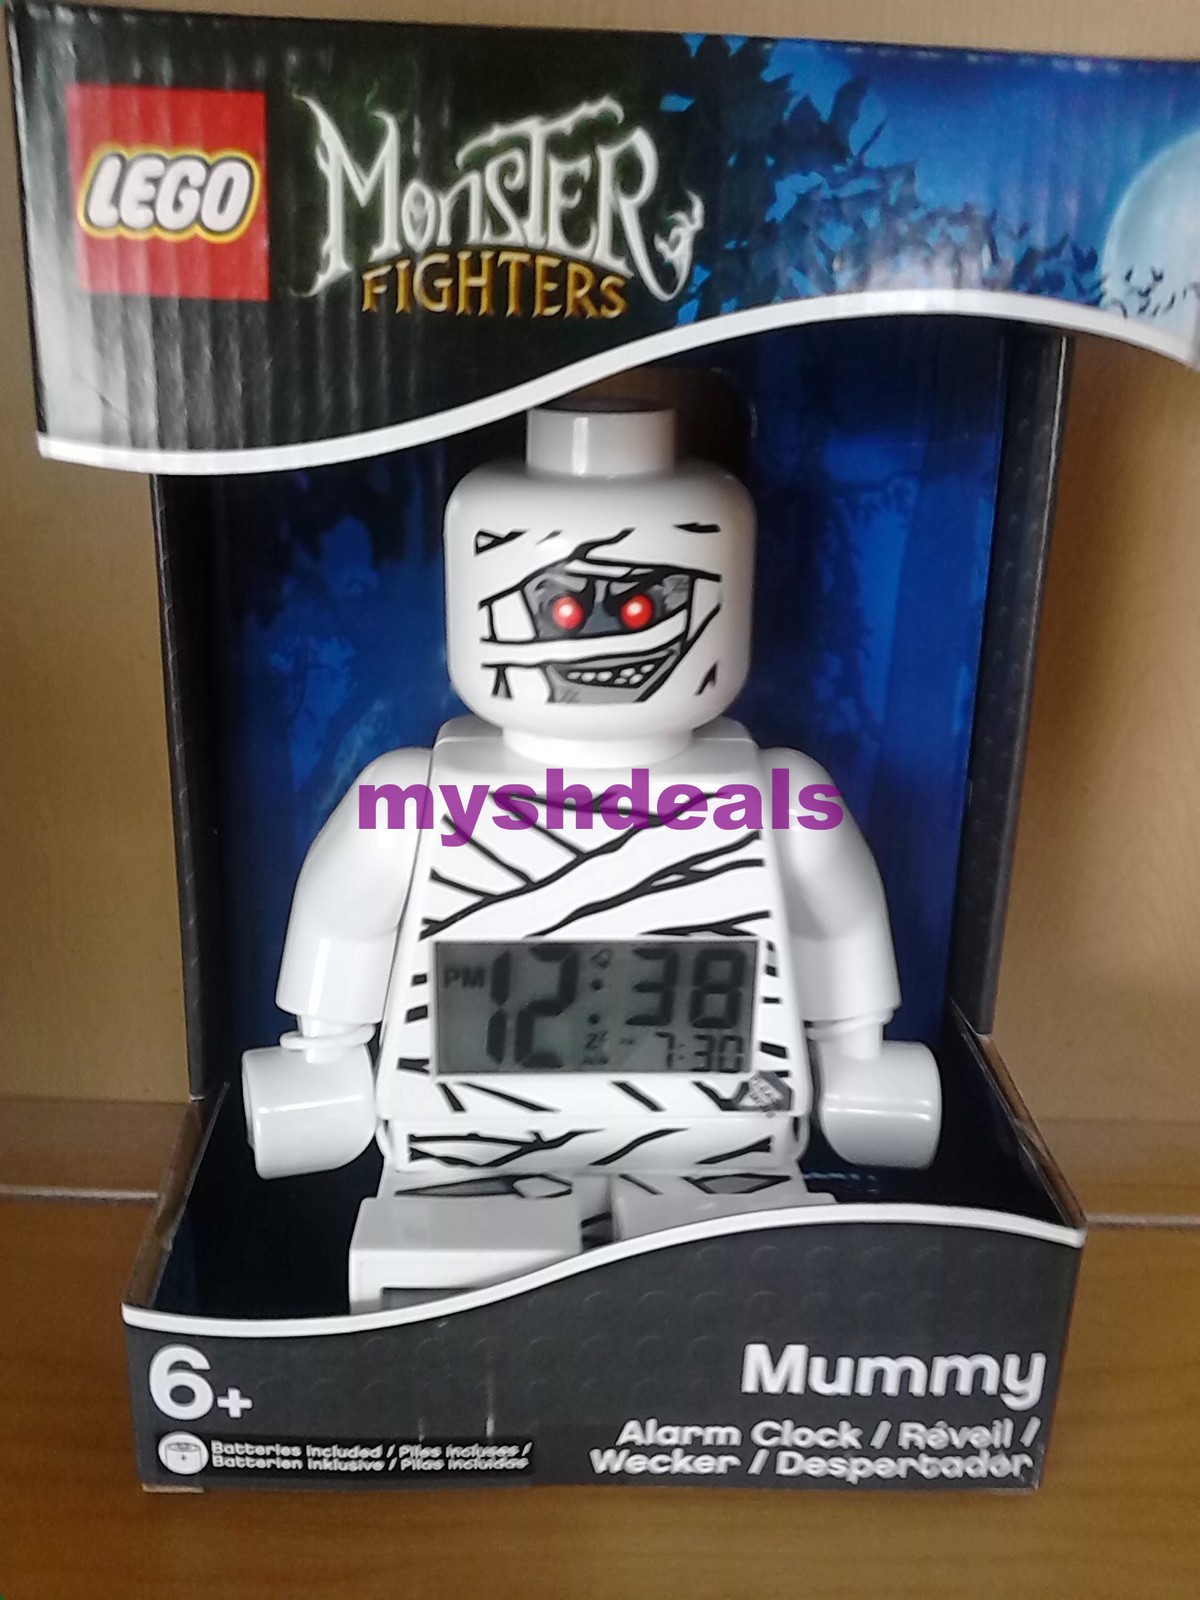 LEGO Monster Fighters Mummy Minifigure  Alarm Clock  - $99.95